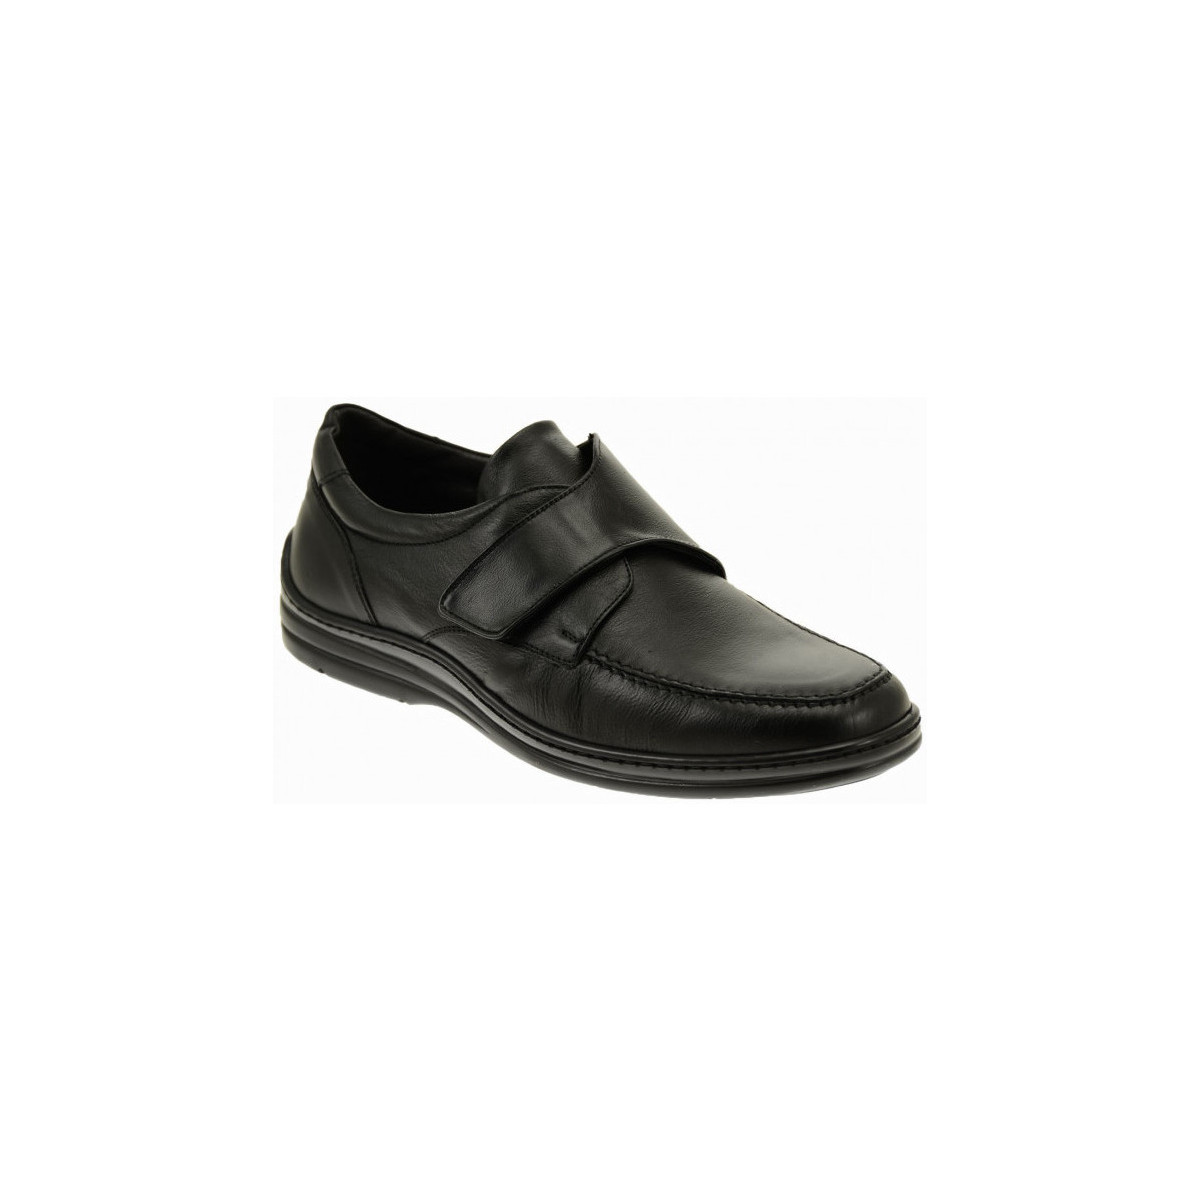 Zapatos Hombre Deportivas Moda Fontana 5669 V Velcro Negro